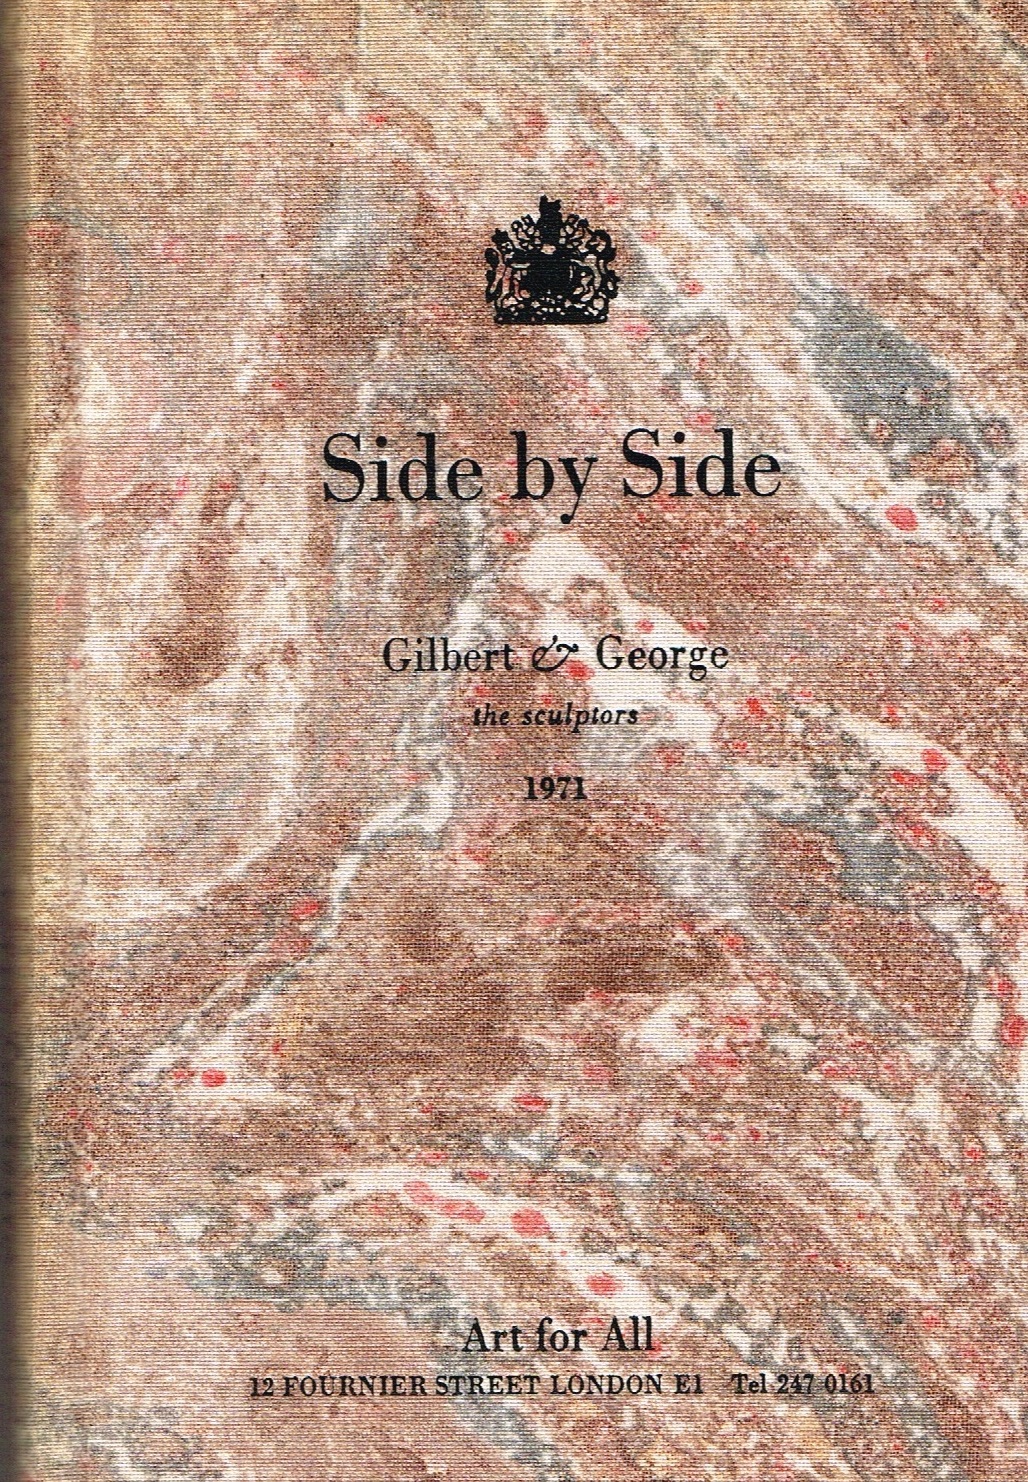 (GILBERT & GEORGE). Gilbert & George - SIDE BY SIDE: GILBERT & GEORGE, THE SCULPTORS